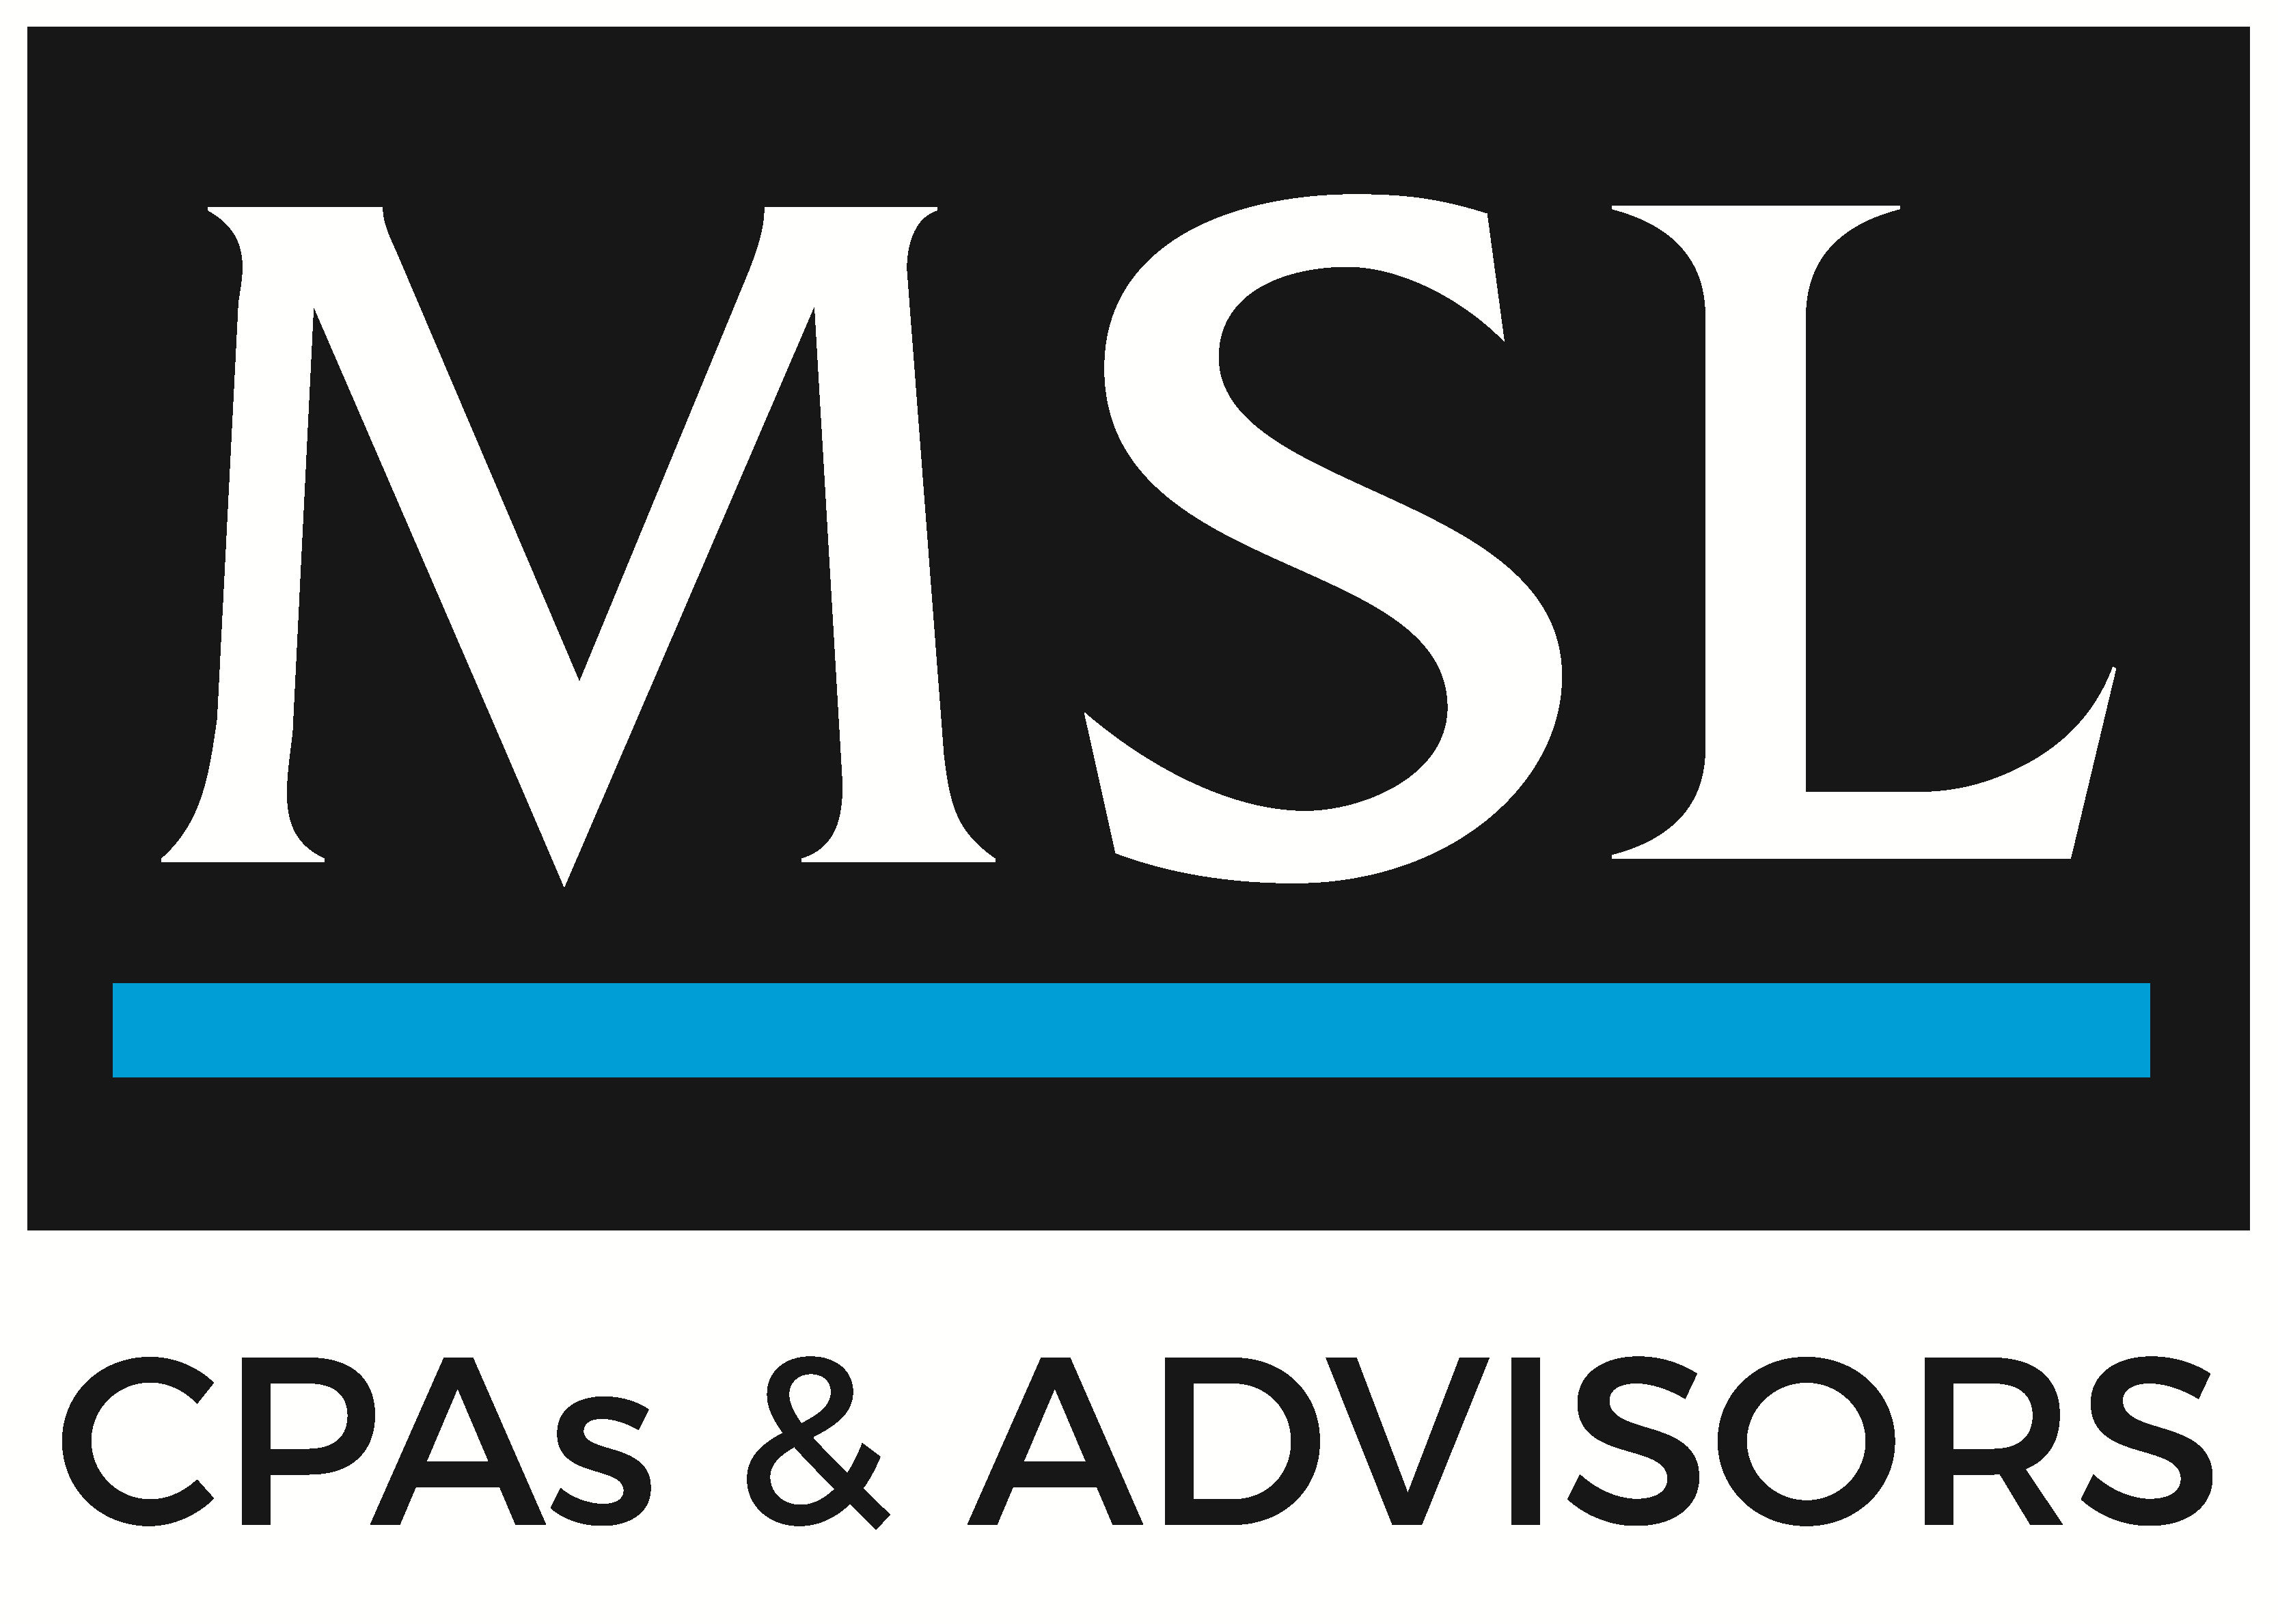 MSL, P.A. logo